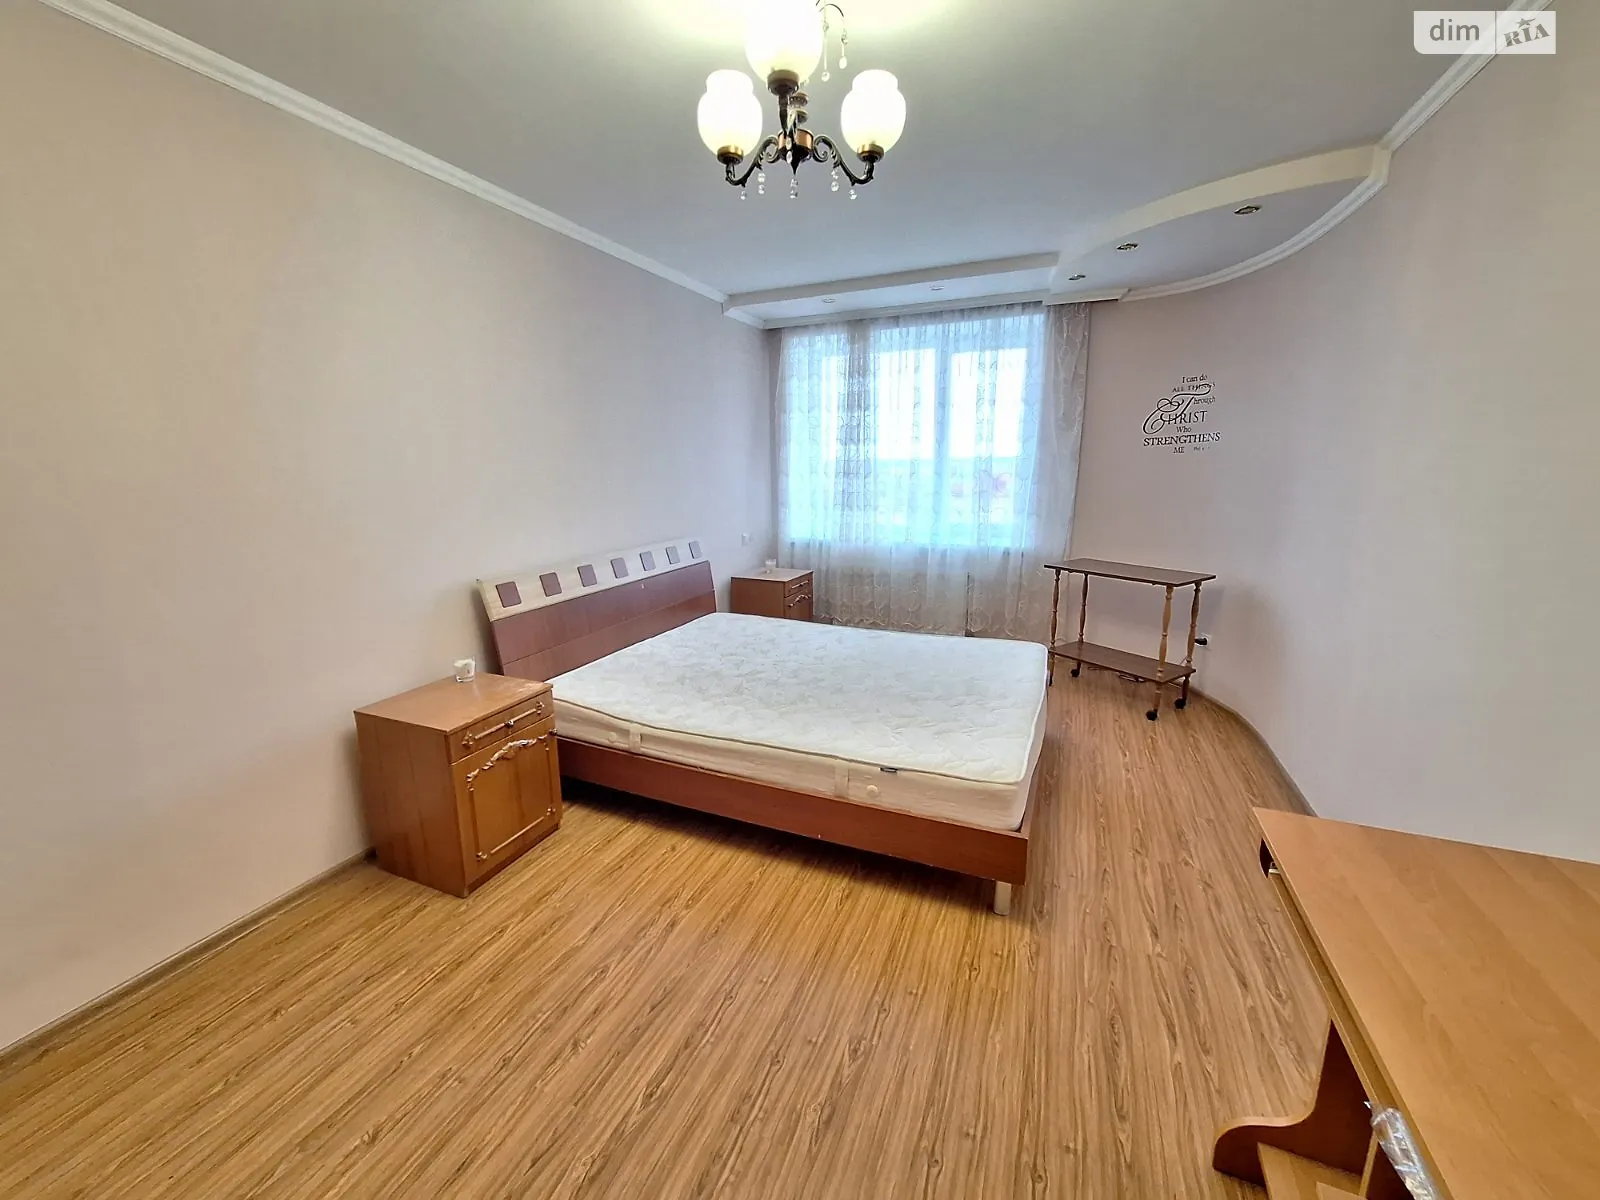 1-кімнатна квартира 44 кв. м у Тернополі, цена: 200 $ - фото 1